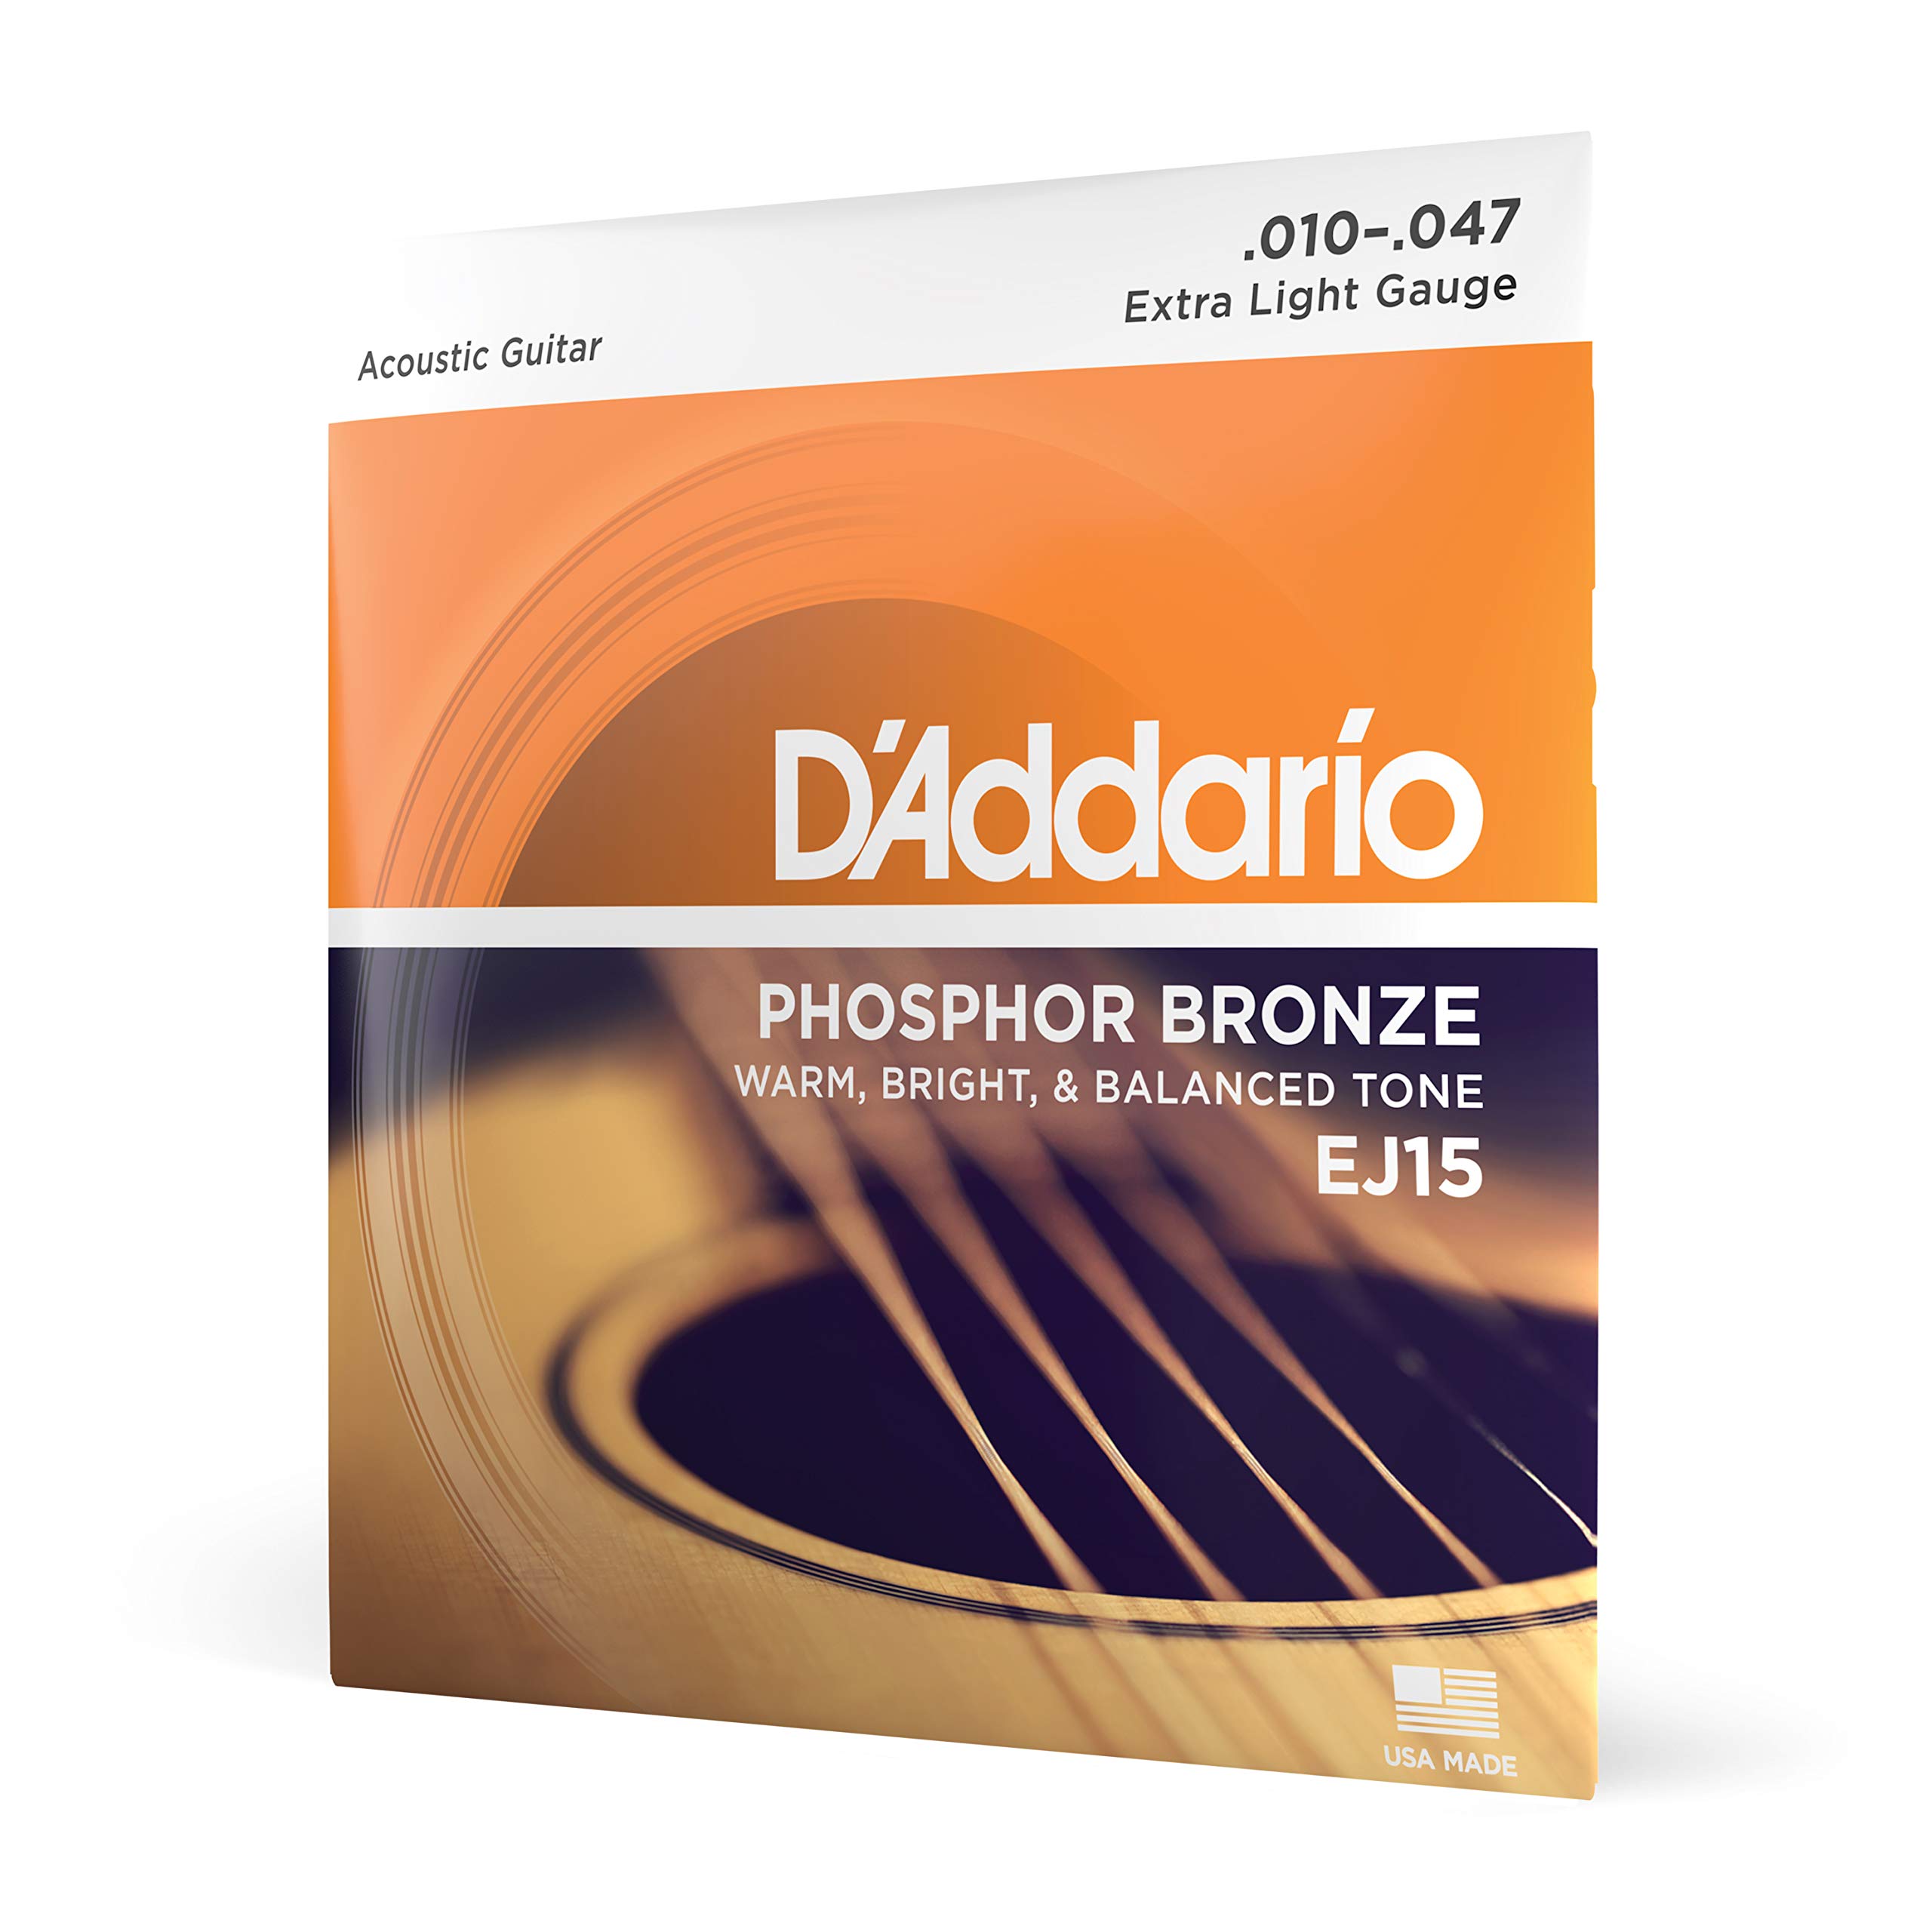 D'Addario Guitar Strings - Phosphor Bronze Acoustic Guitar Strings